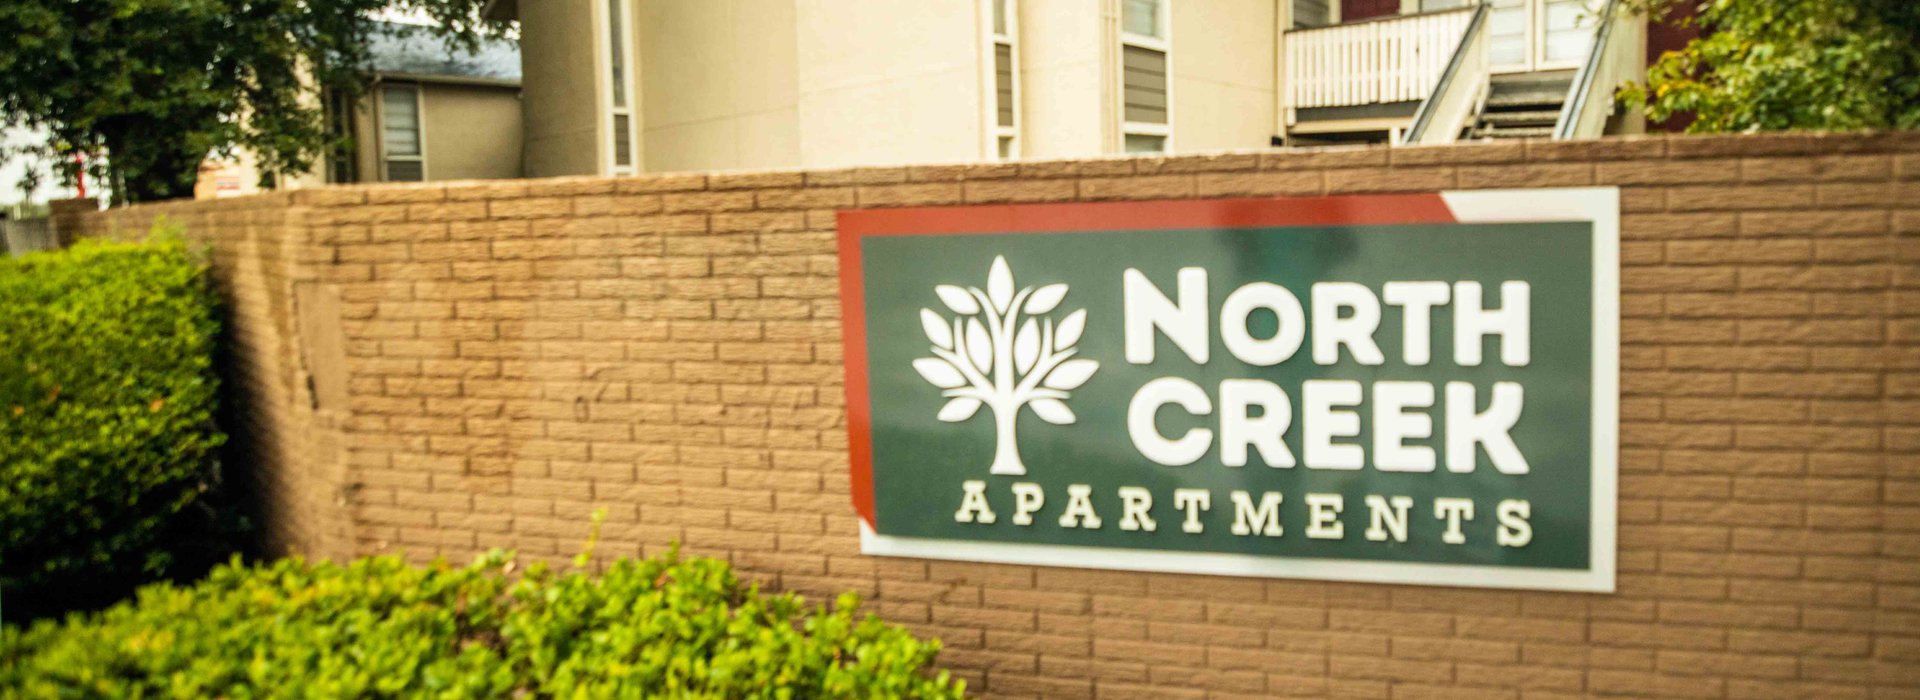 North Creek Condominiums sign